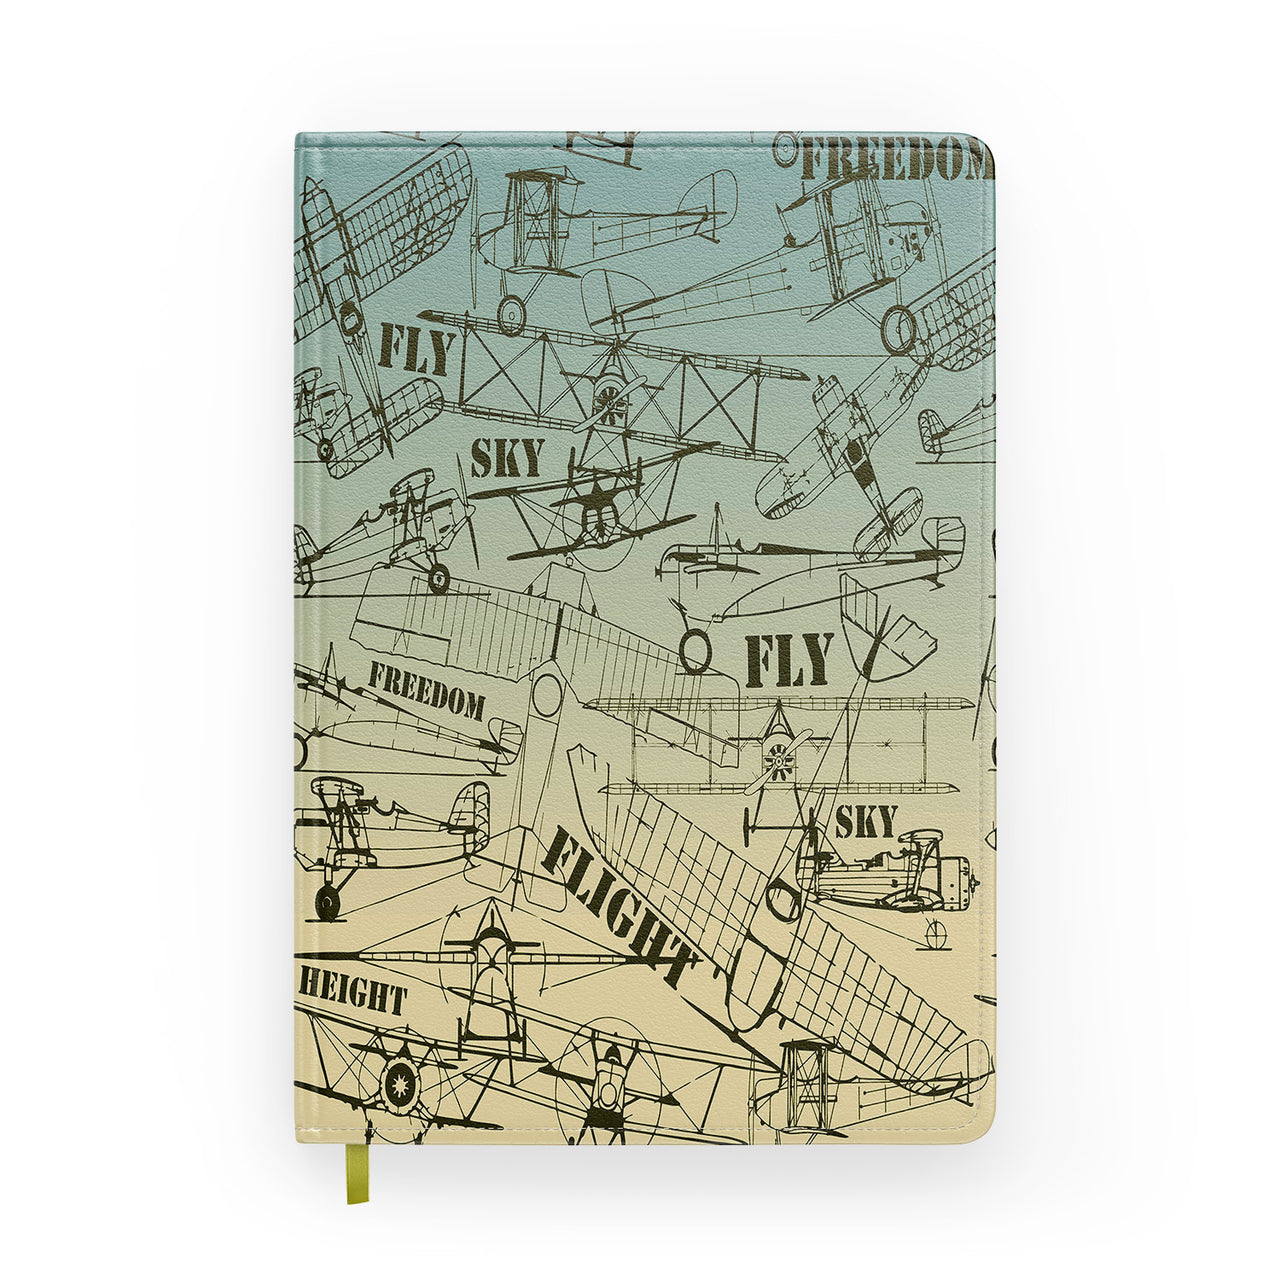 Retro Airplanes & Text Designed Notebooks